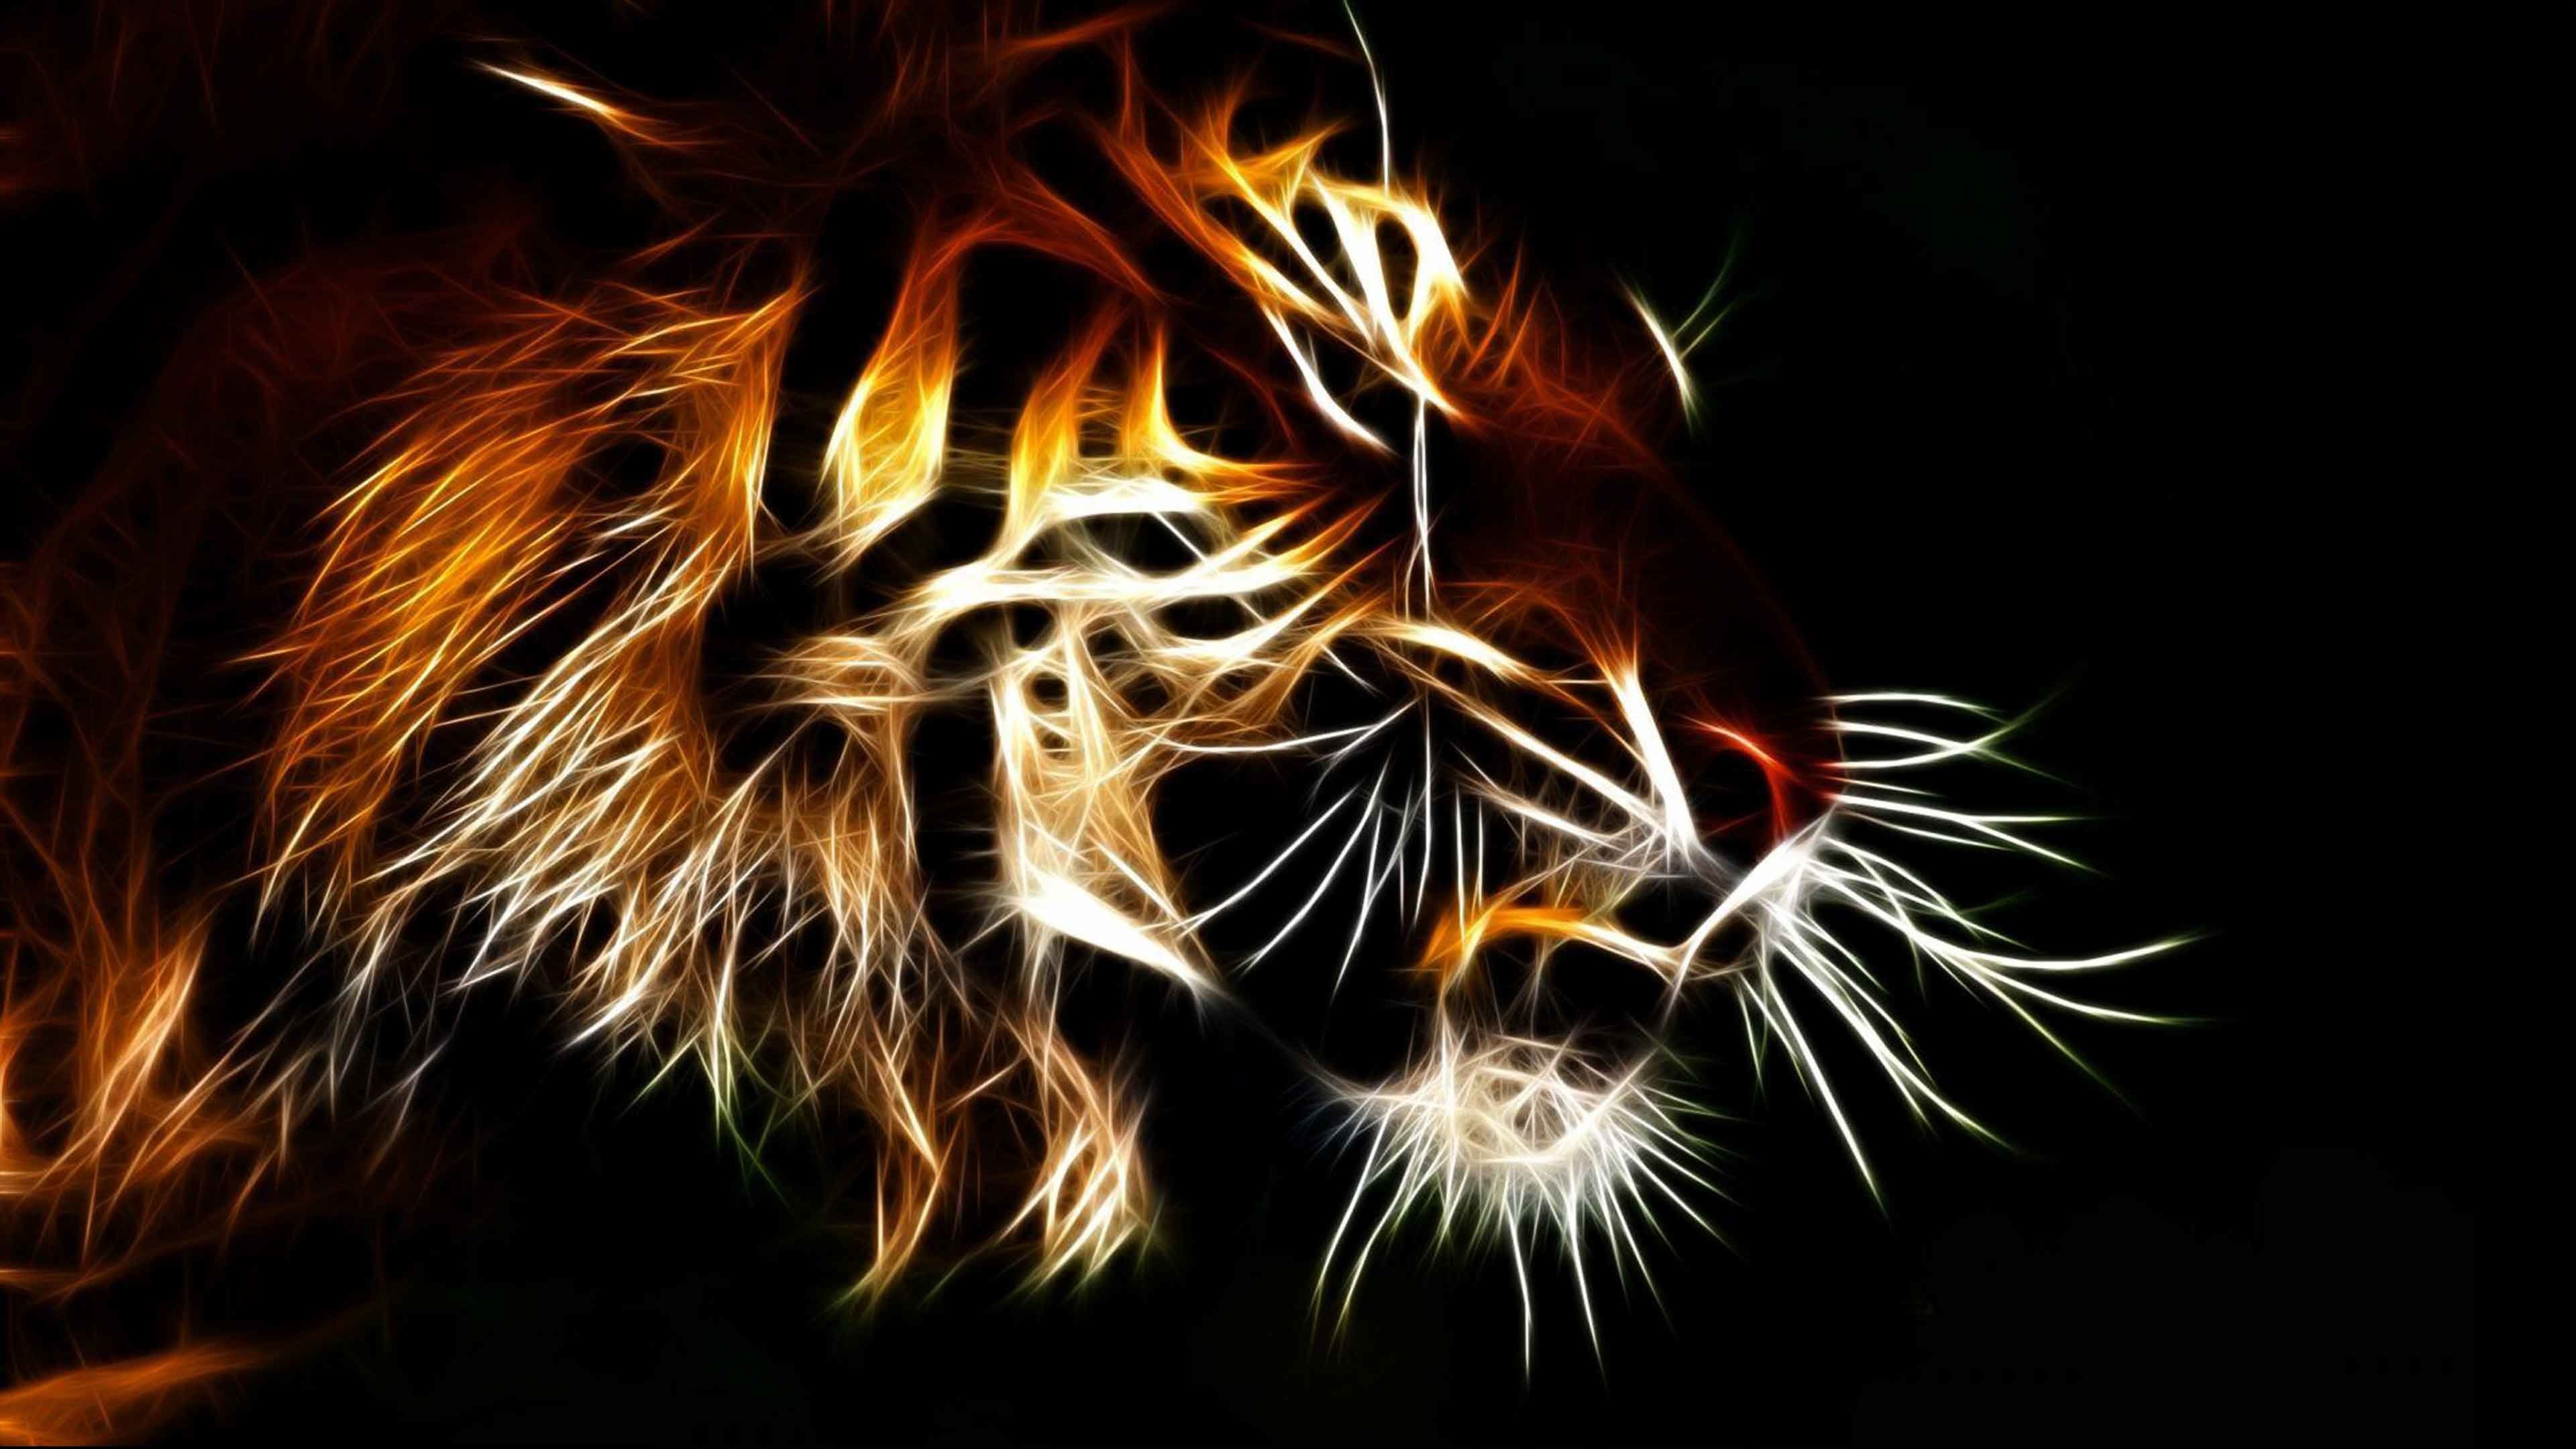 Cool Tiger Background .wallpapercome.com